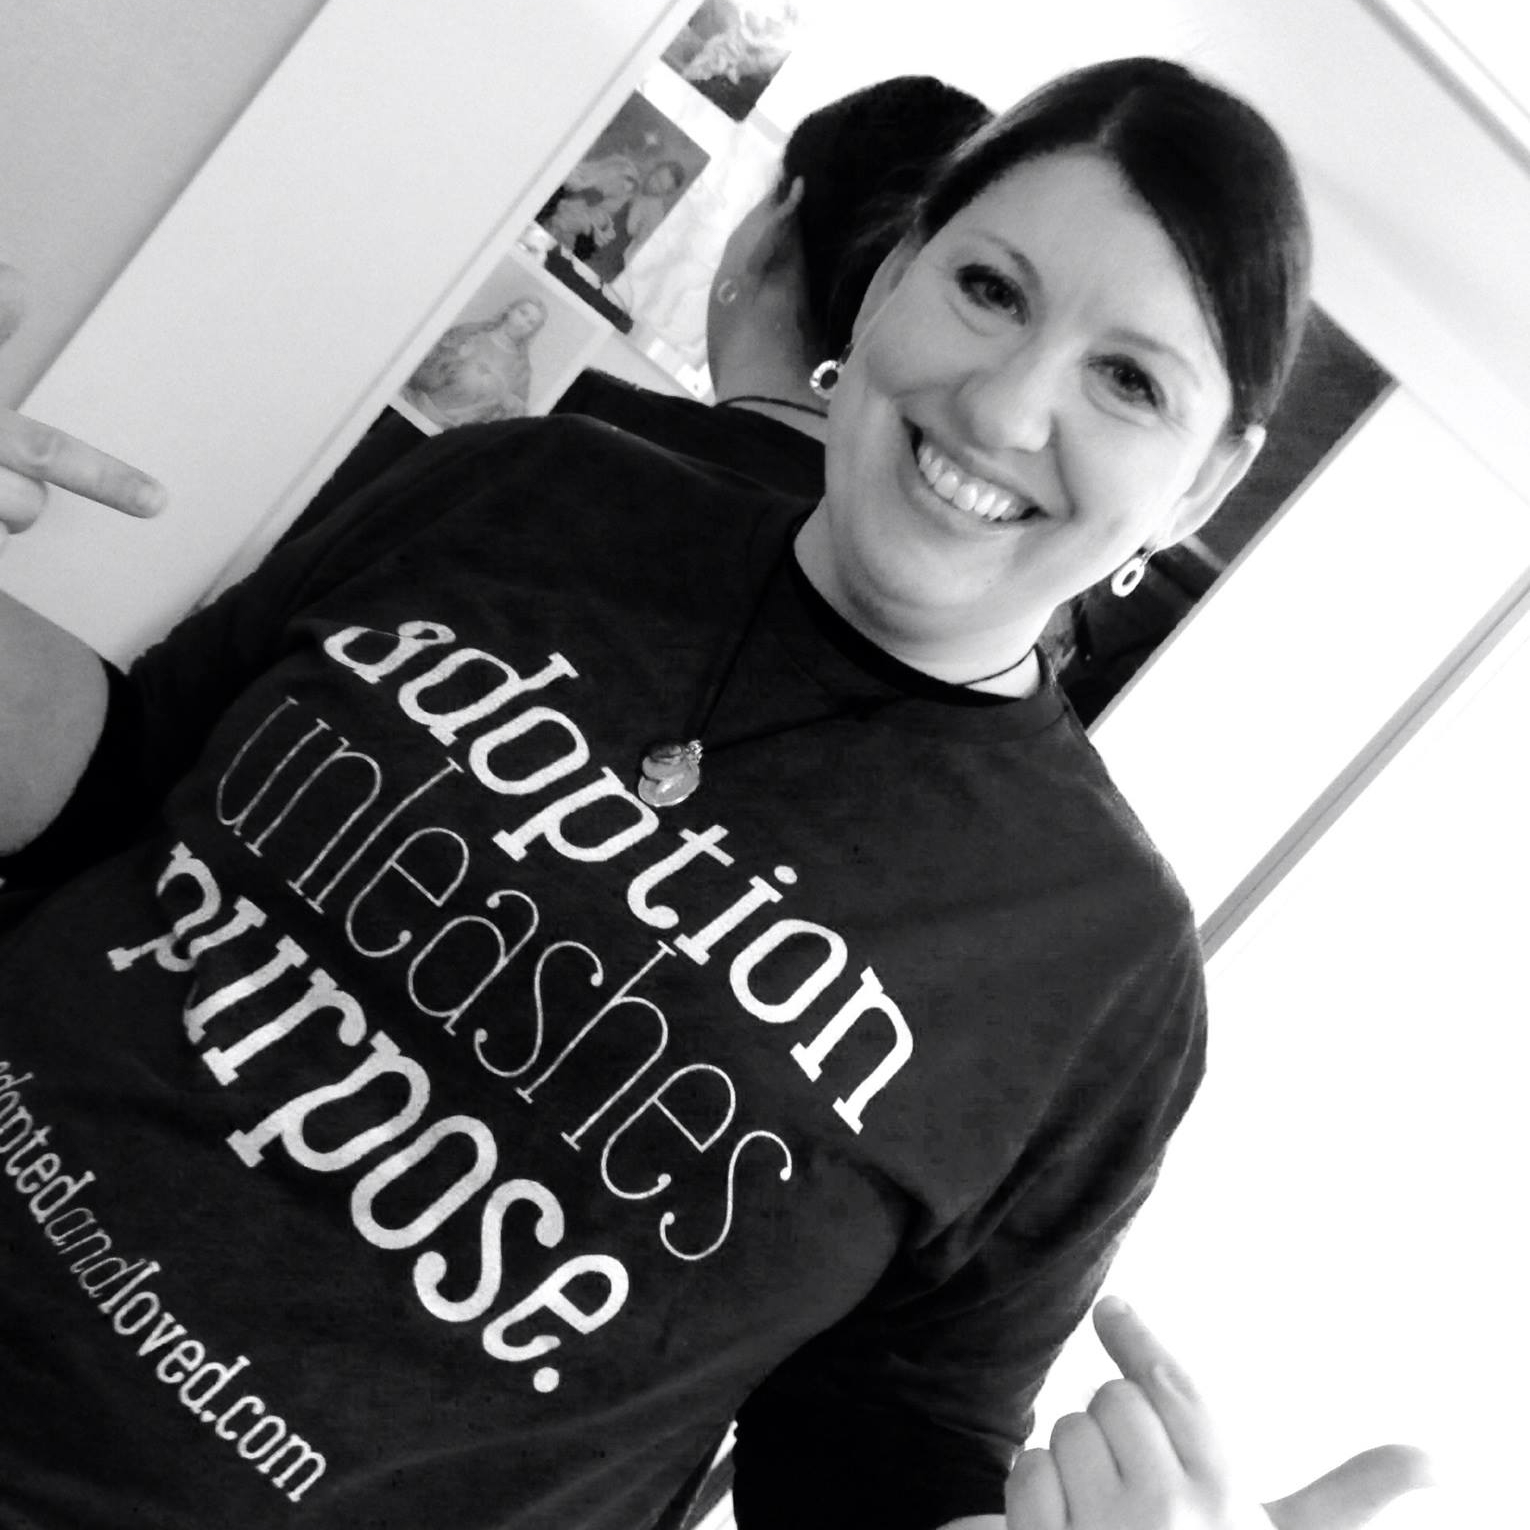 Pro-life spokesperson Catherine Adair adoption unleashes purpose shirt